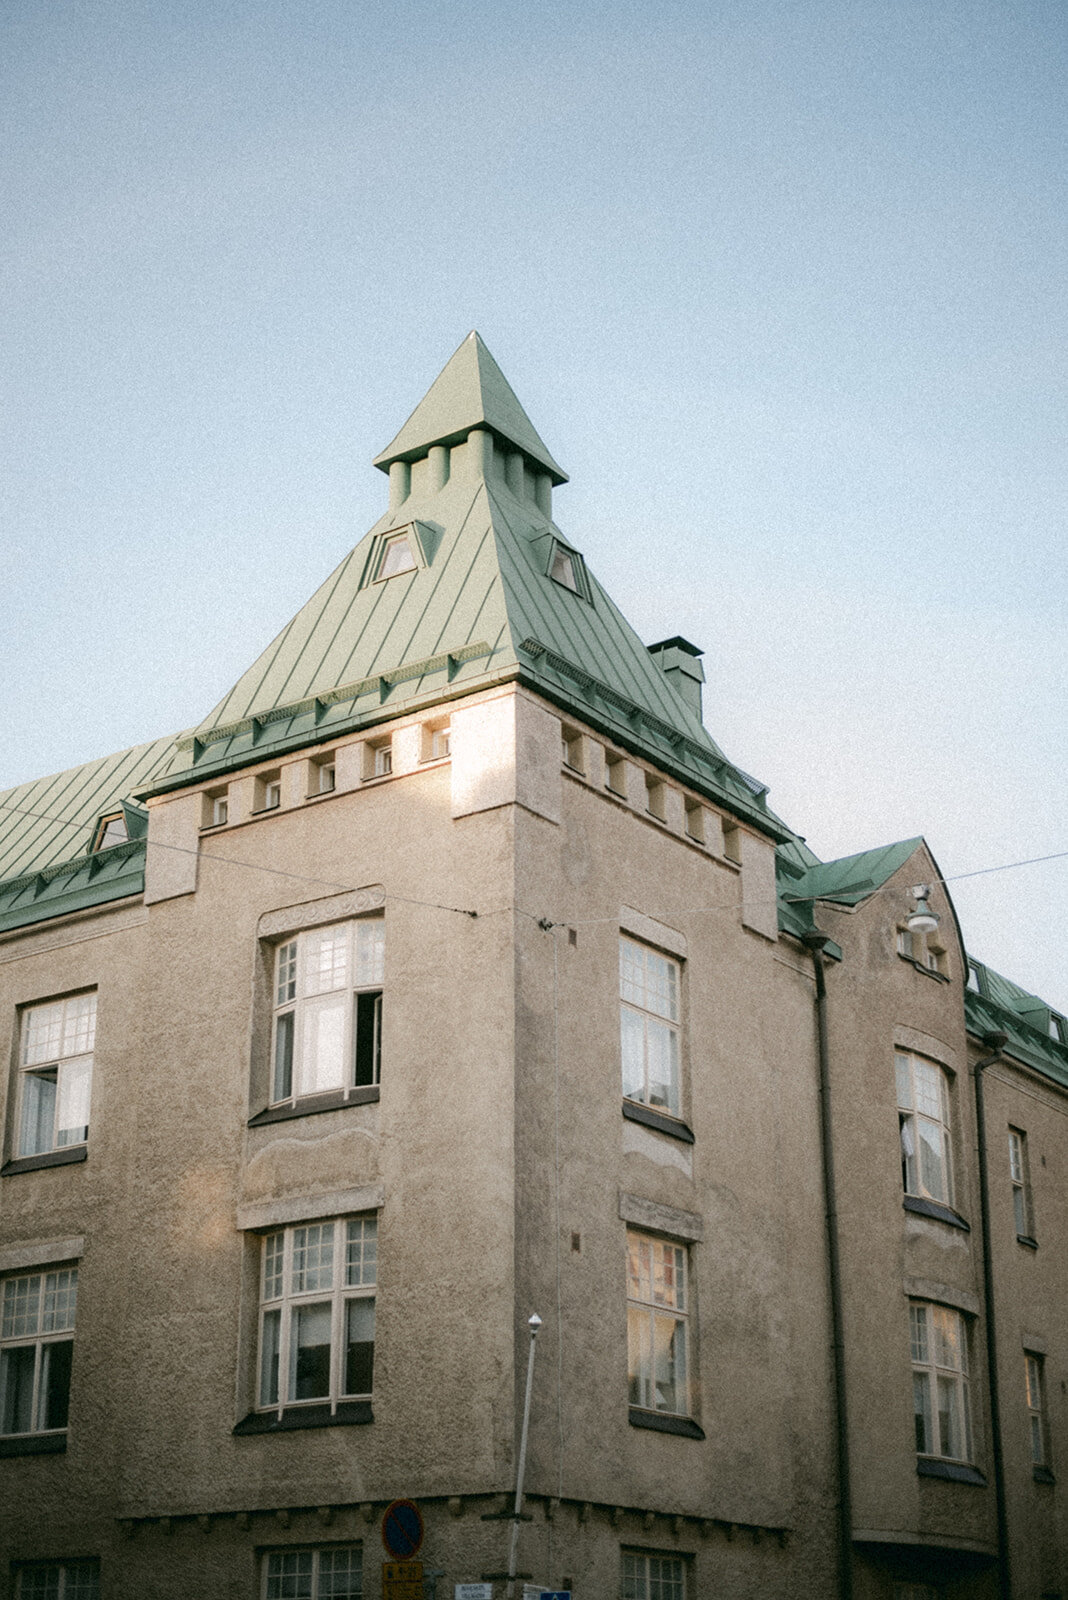 A photograph of art nouveau buildings in Helsinki by photographer Hannika Gabrielsson